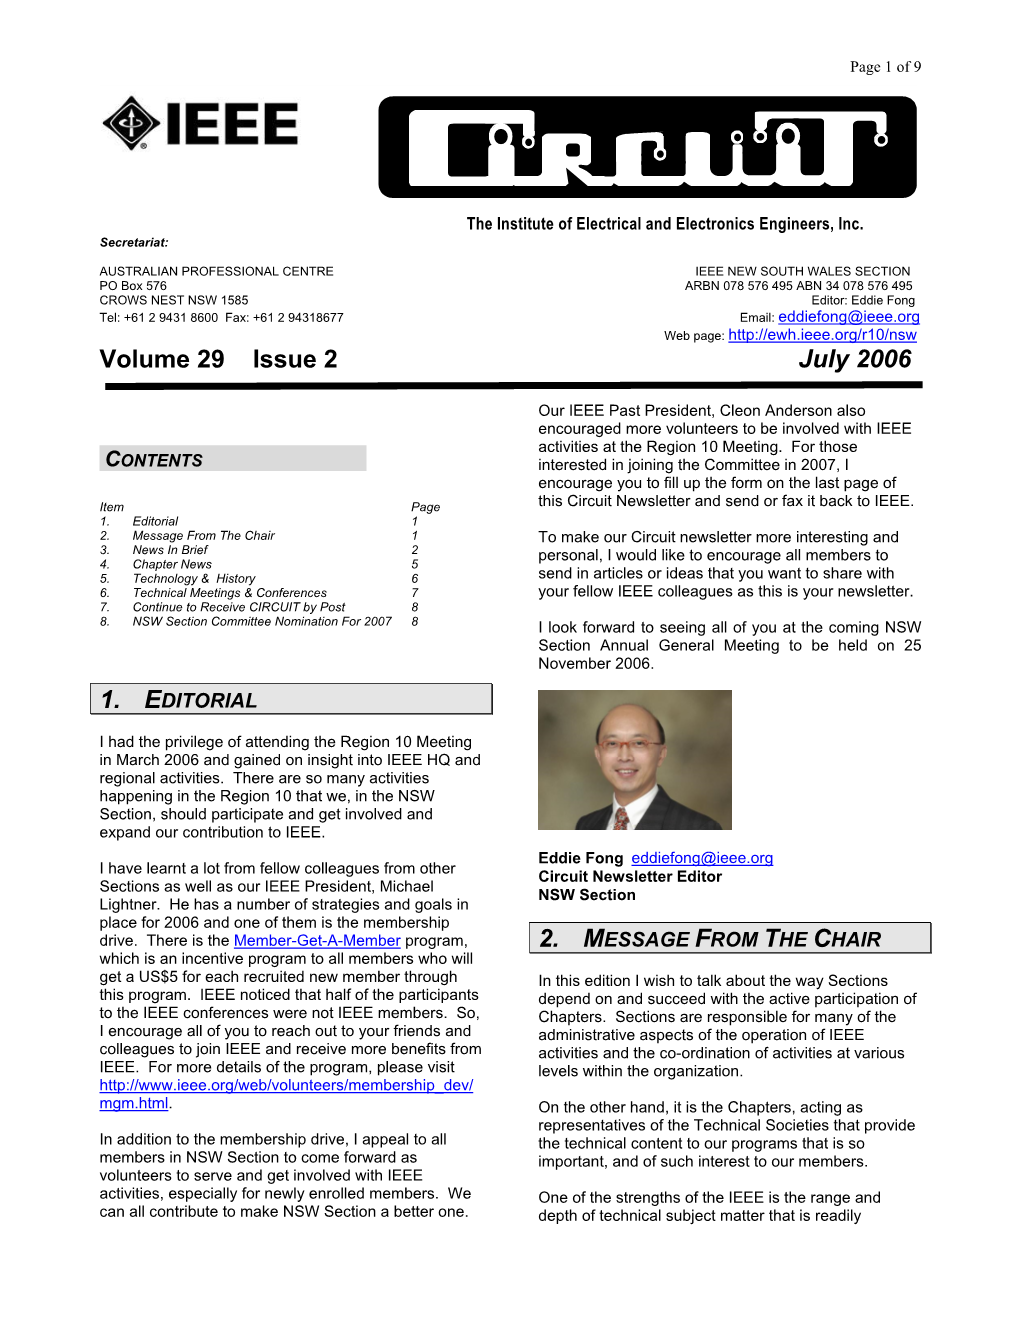 Volume 29 Issue 2 July 2006